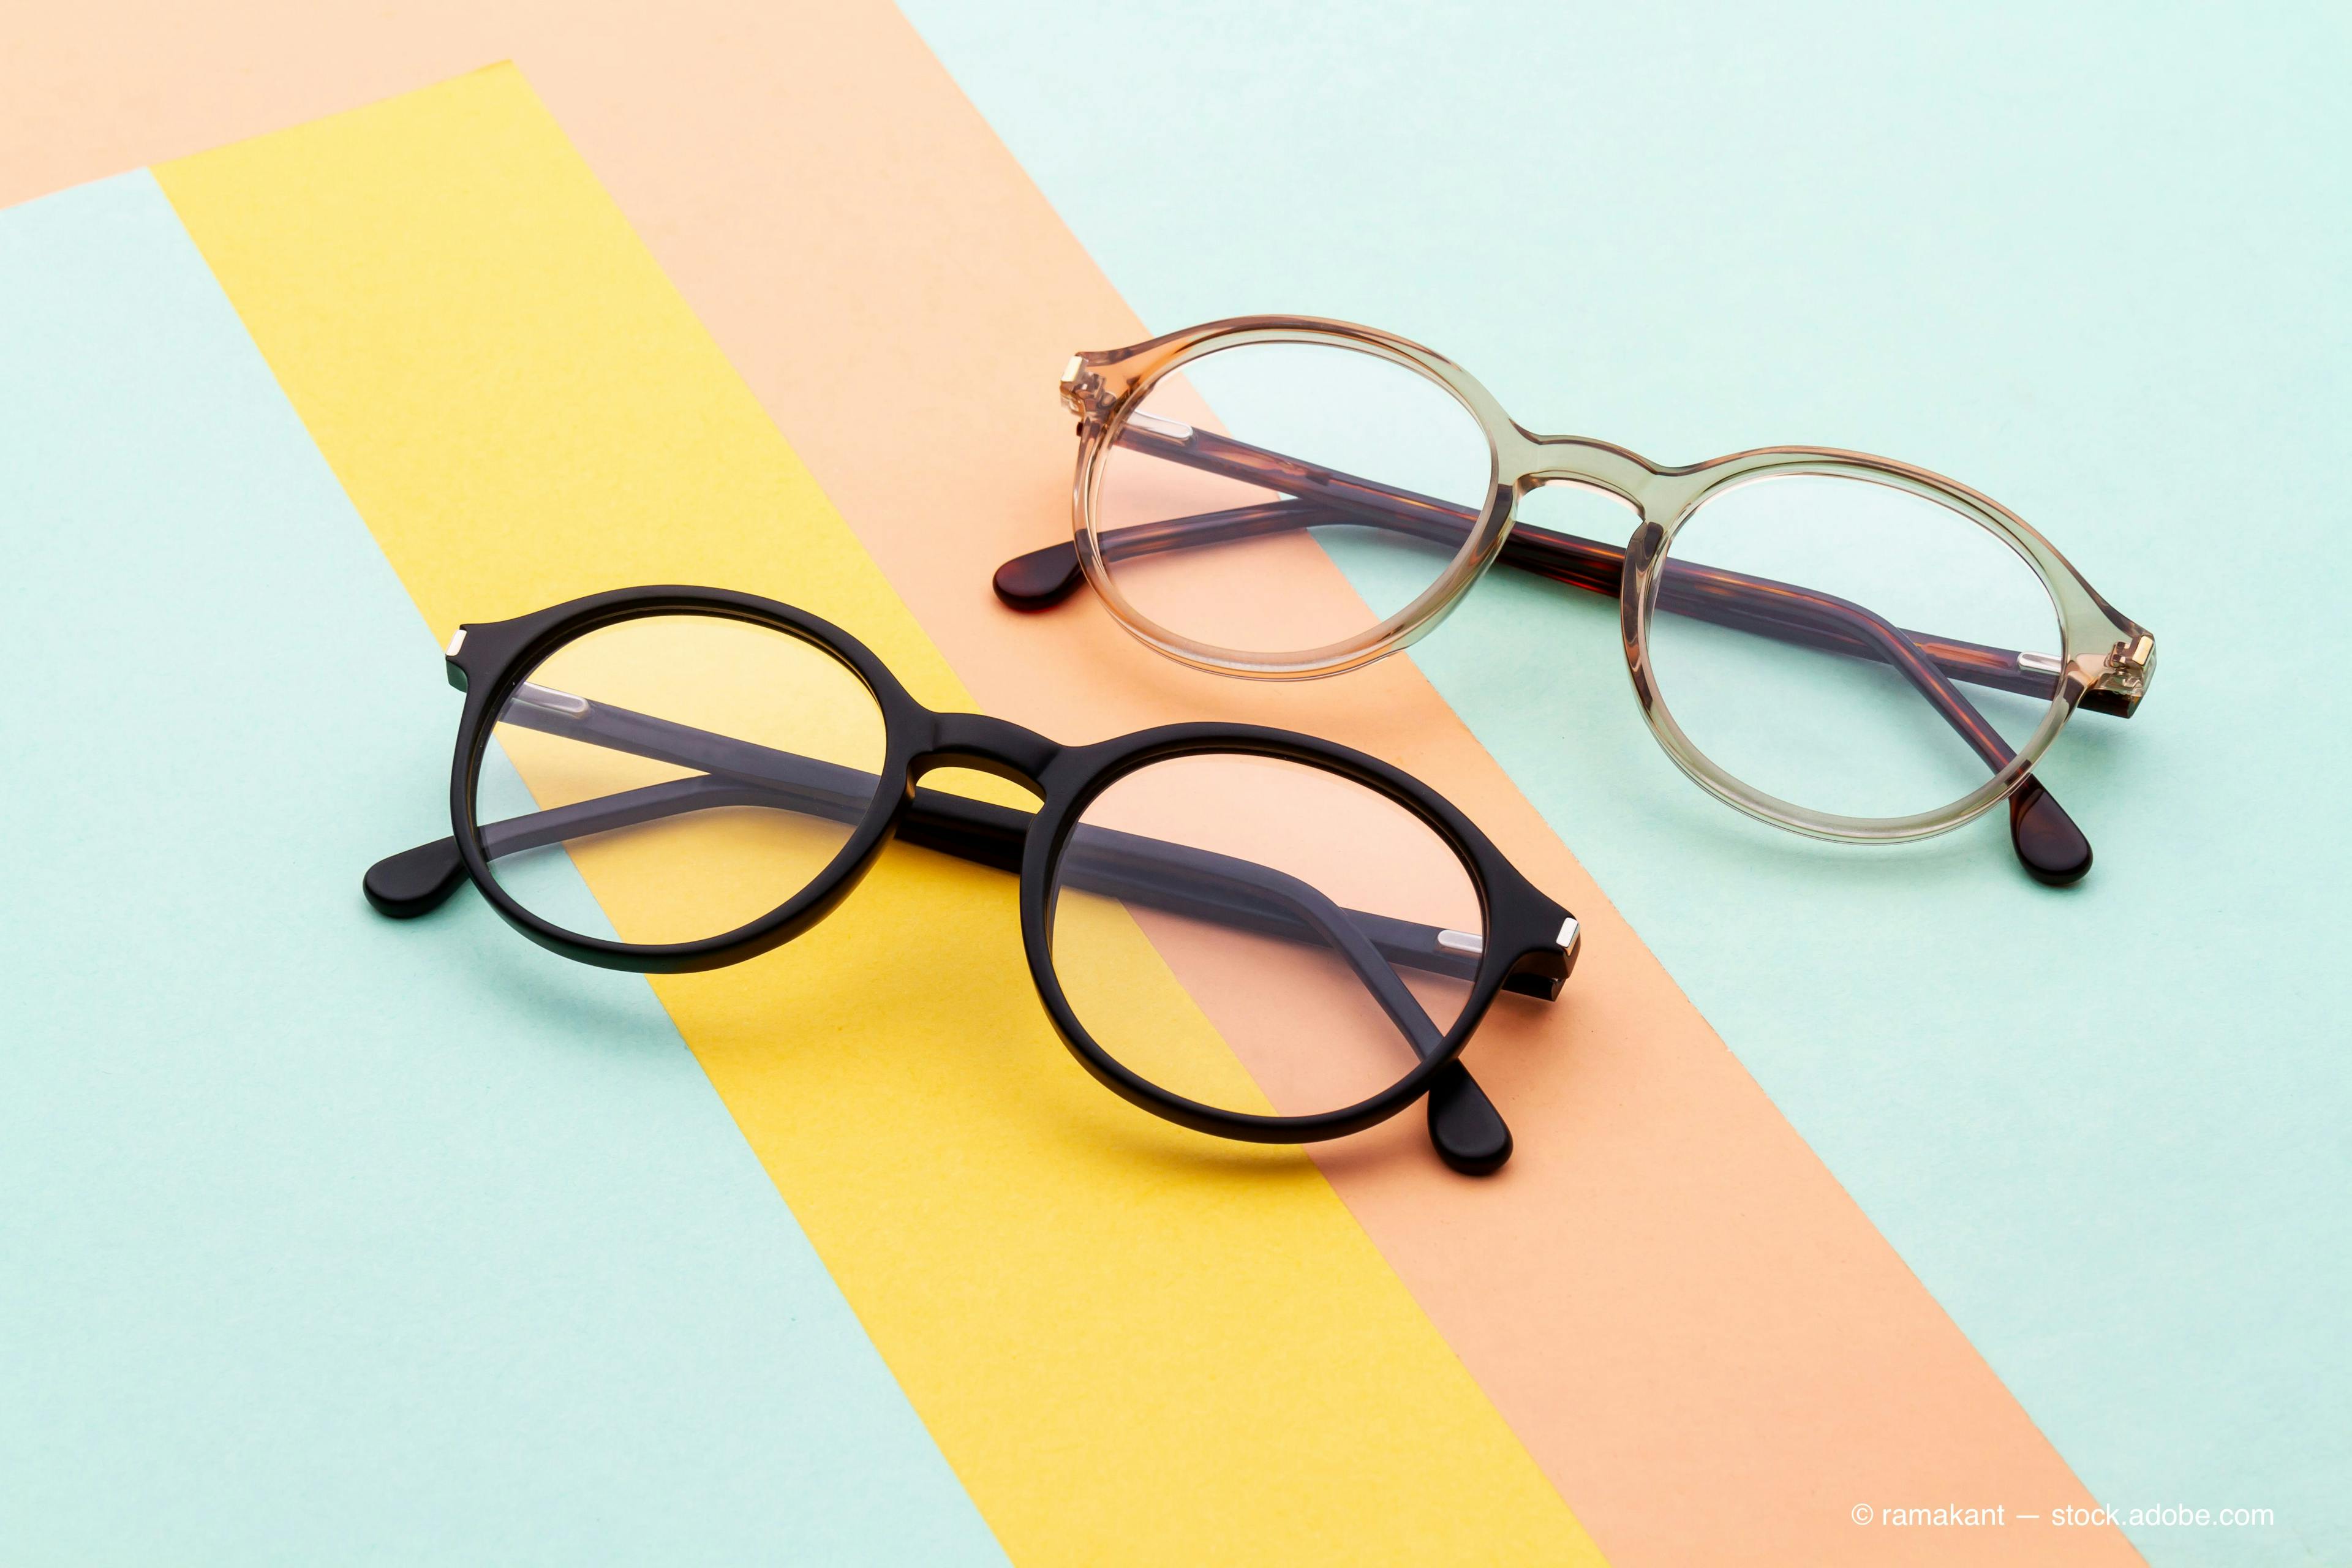 Glasses against colorful backdrop Image Credit: AdobeStock/ramakant